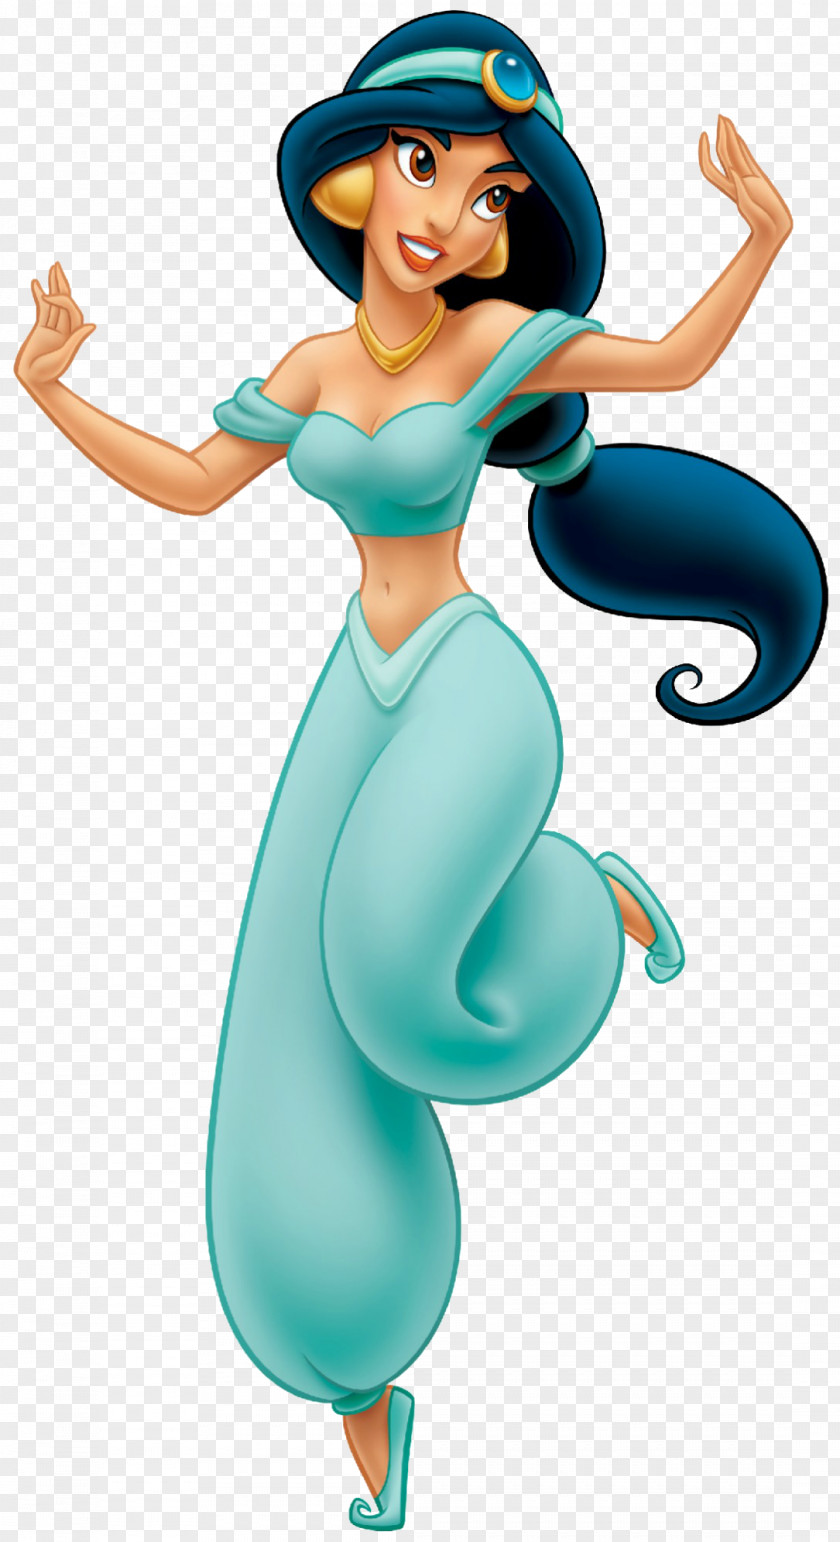 Jasmine Princess Aladdin The Sultan Disney Badroulbadour PNG